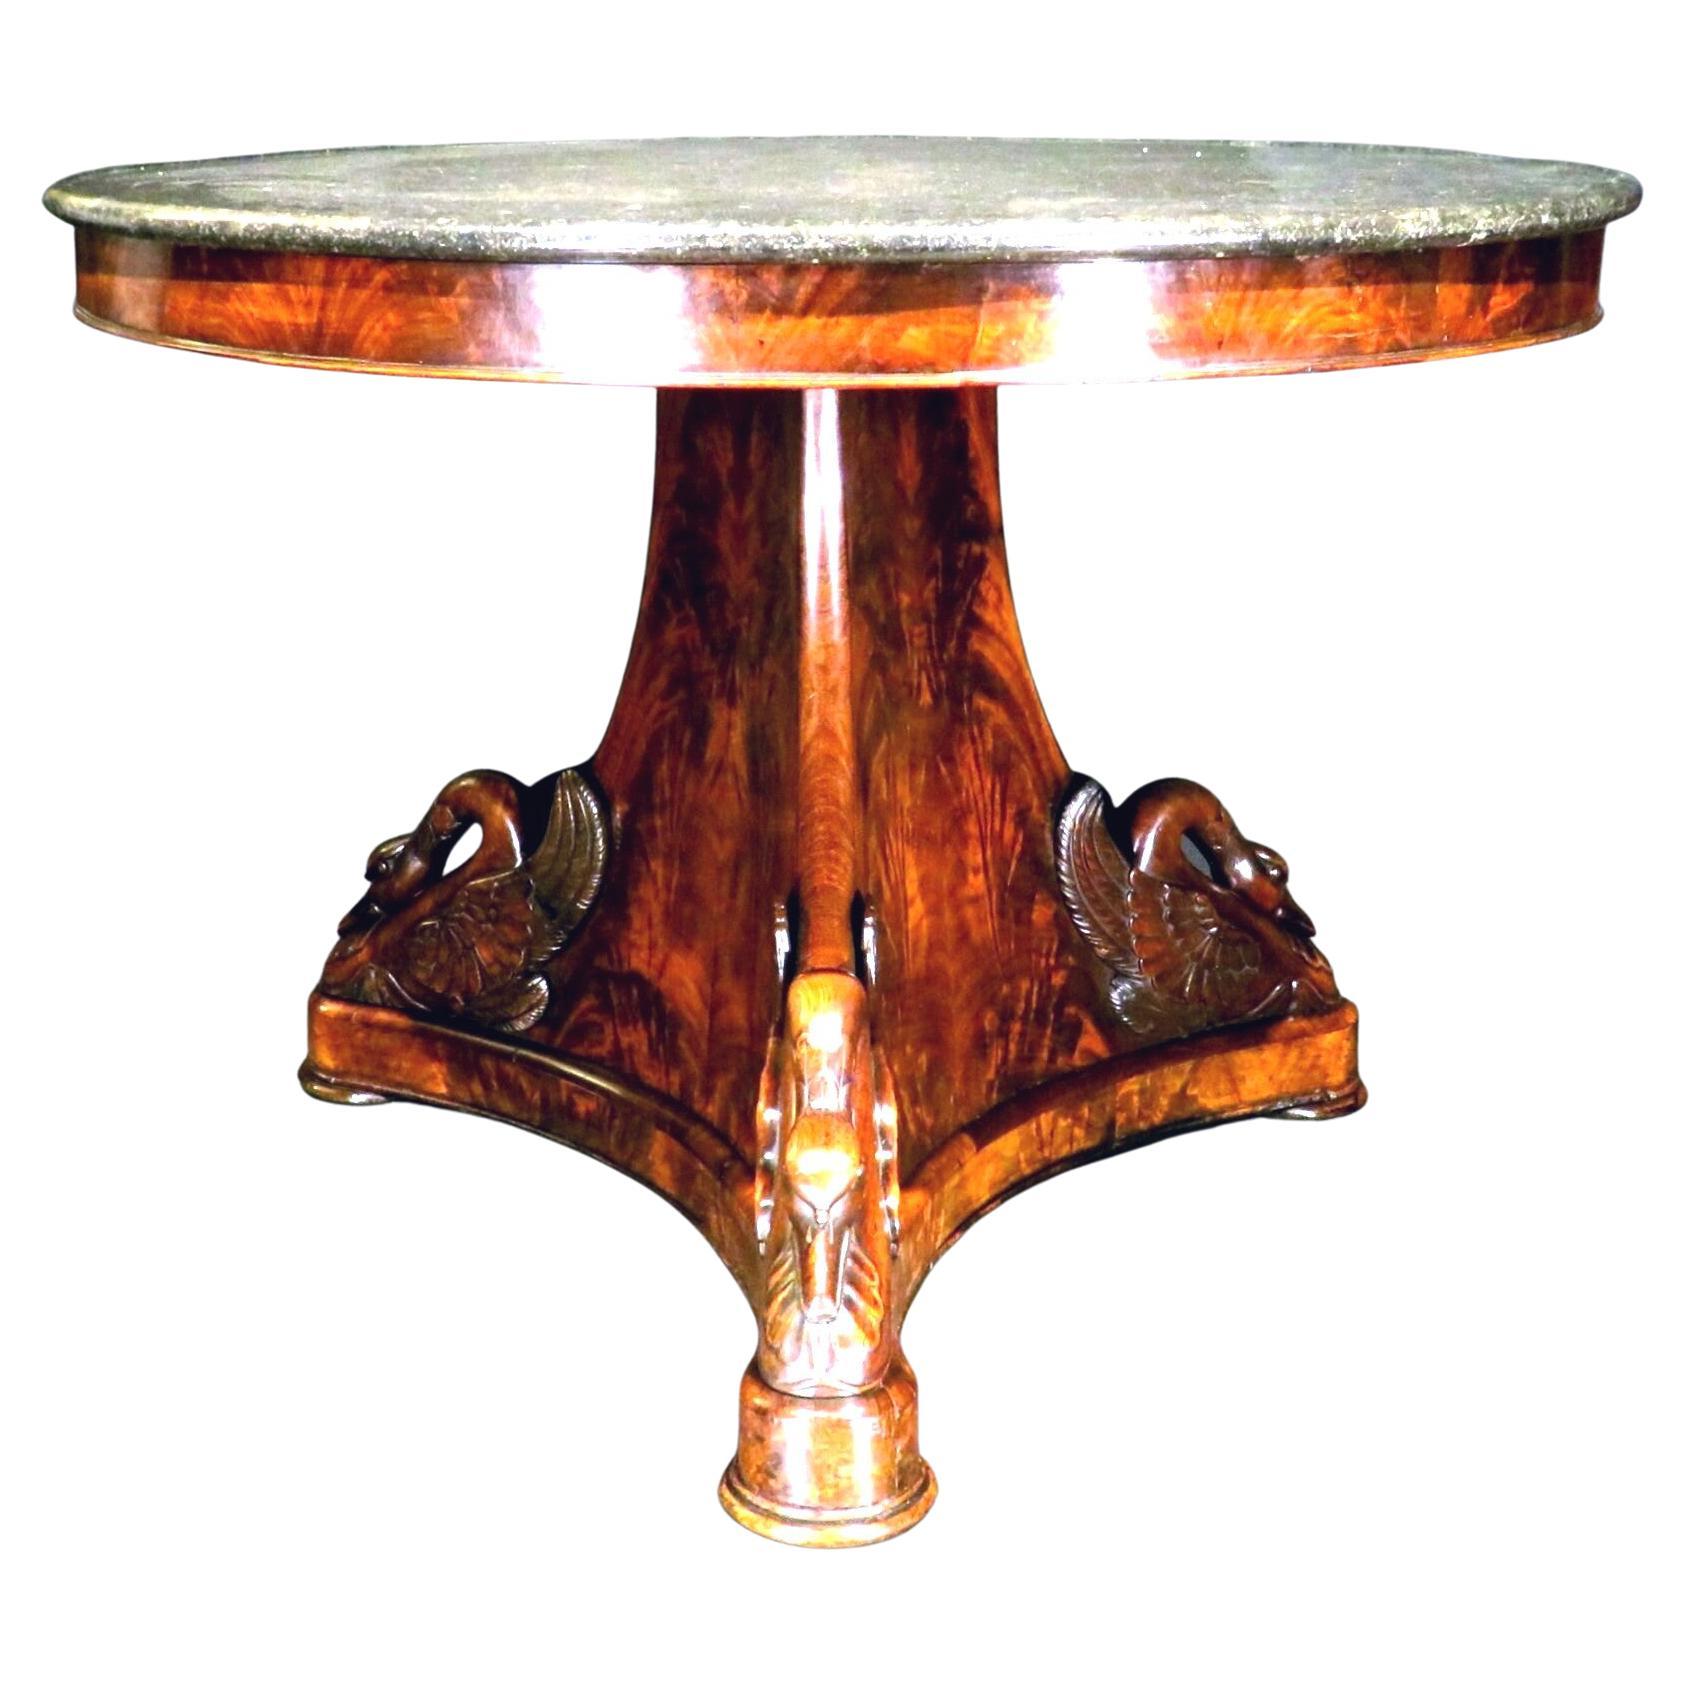 An Exceptional French Empire Period Mahogany Pedestal / Centre Table, Circa 1815